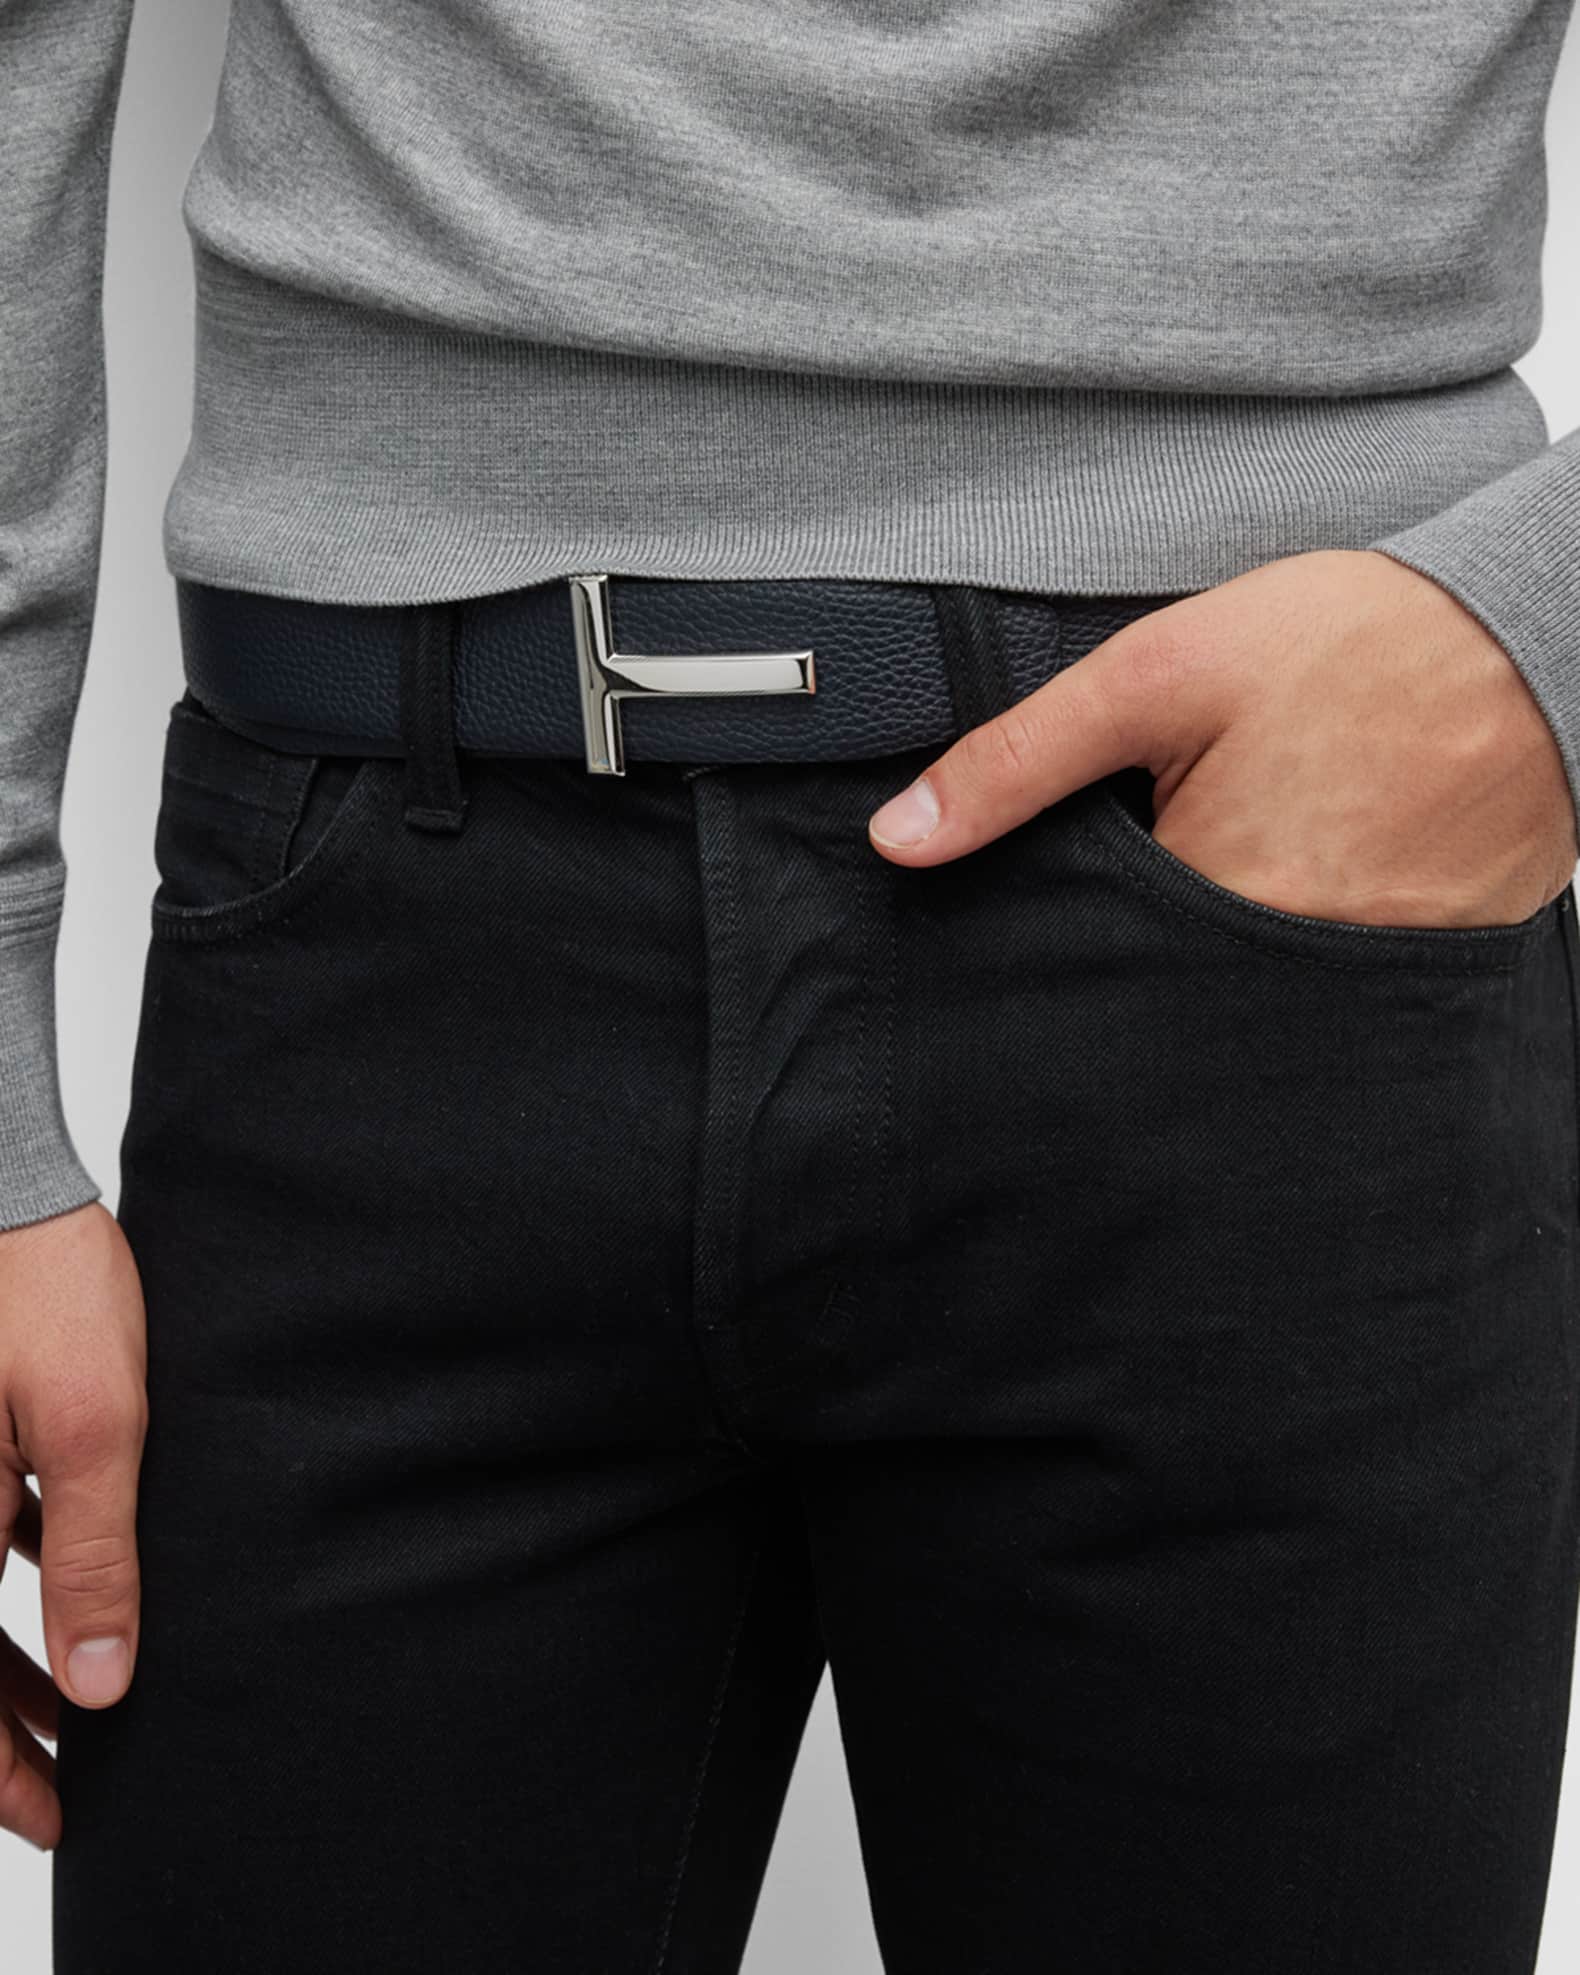 TOM FORD Men's Signature T Reversible Leather Belt | Neiman Marcus